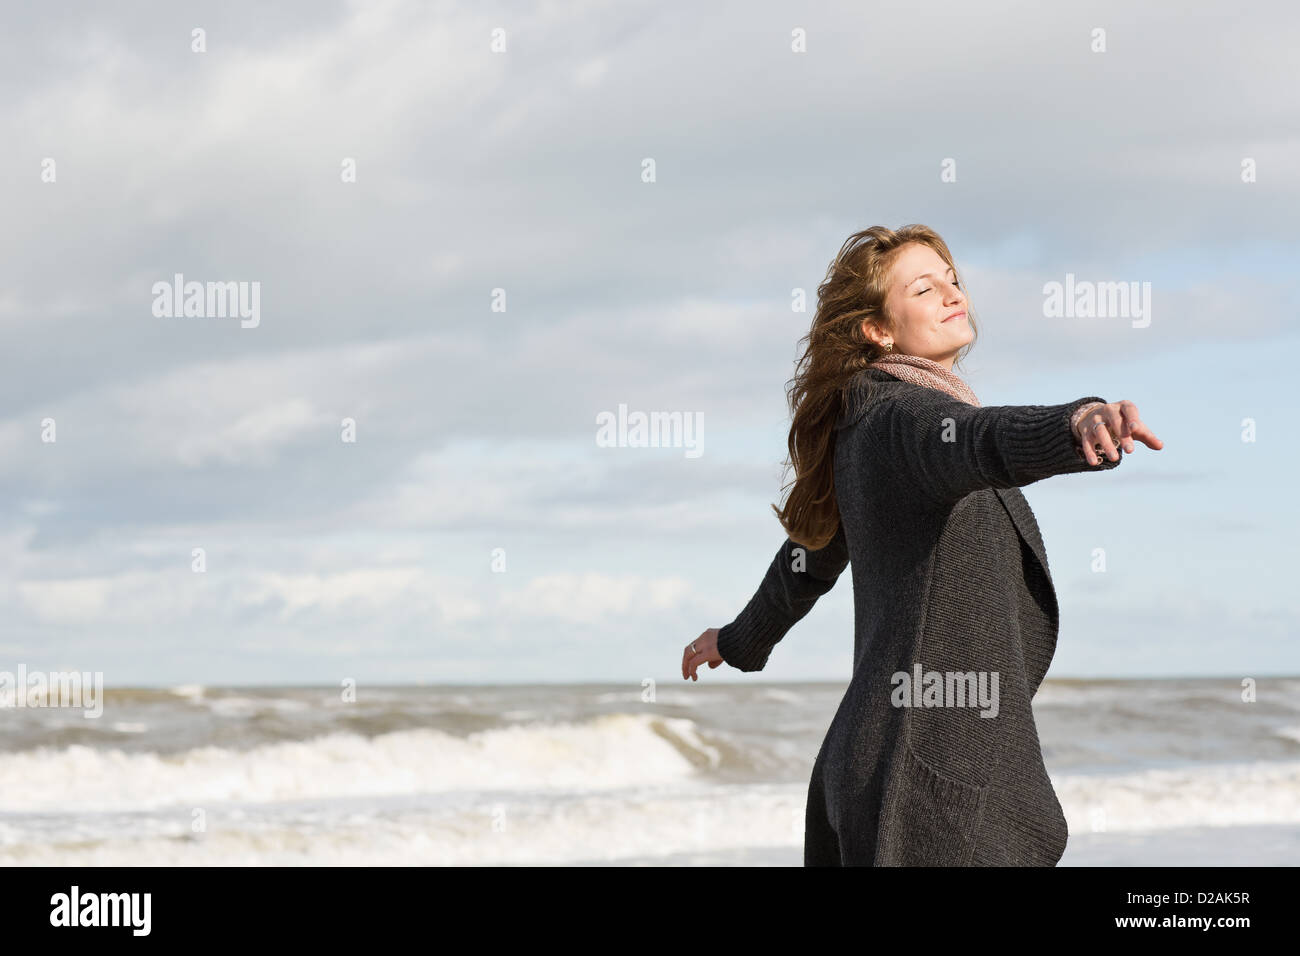 Woman playing on beach Stock Photo